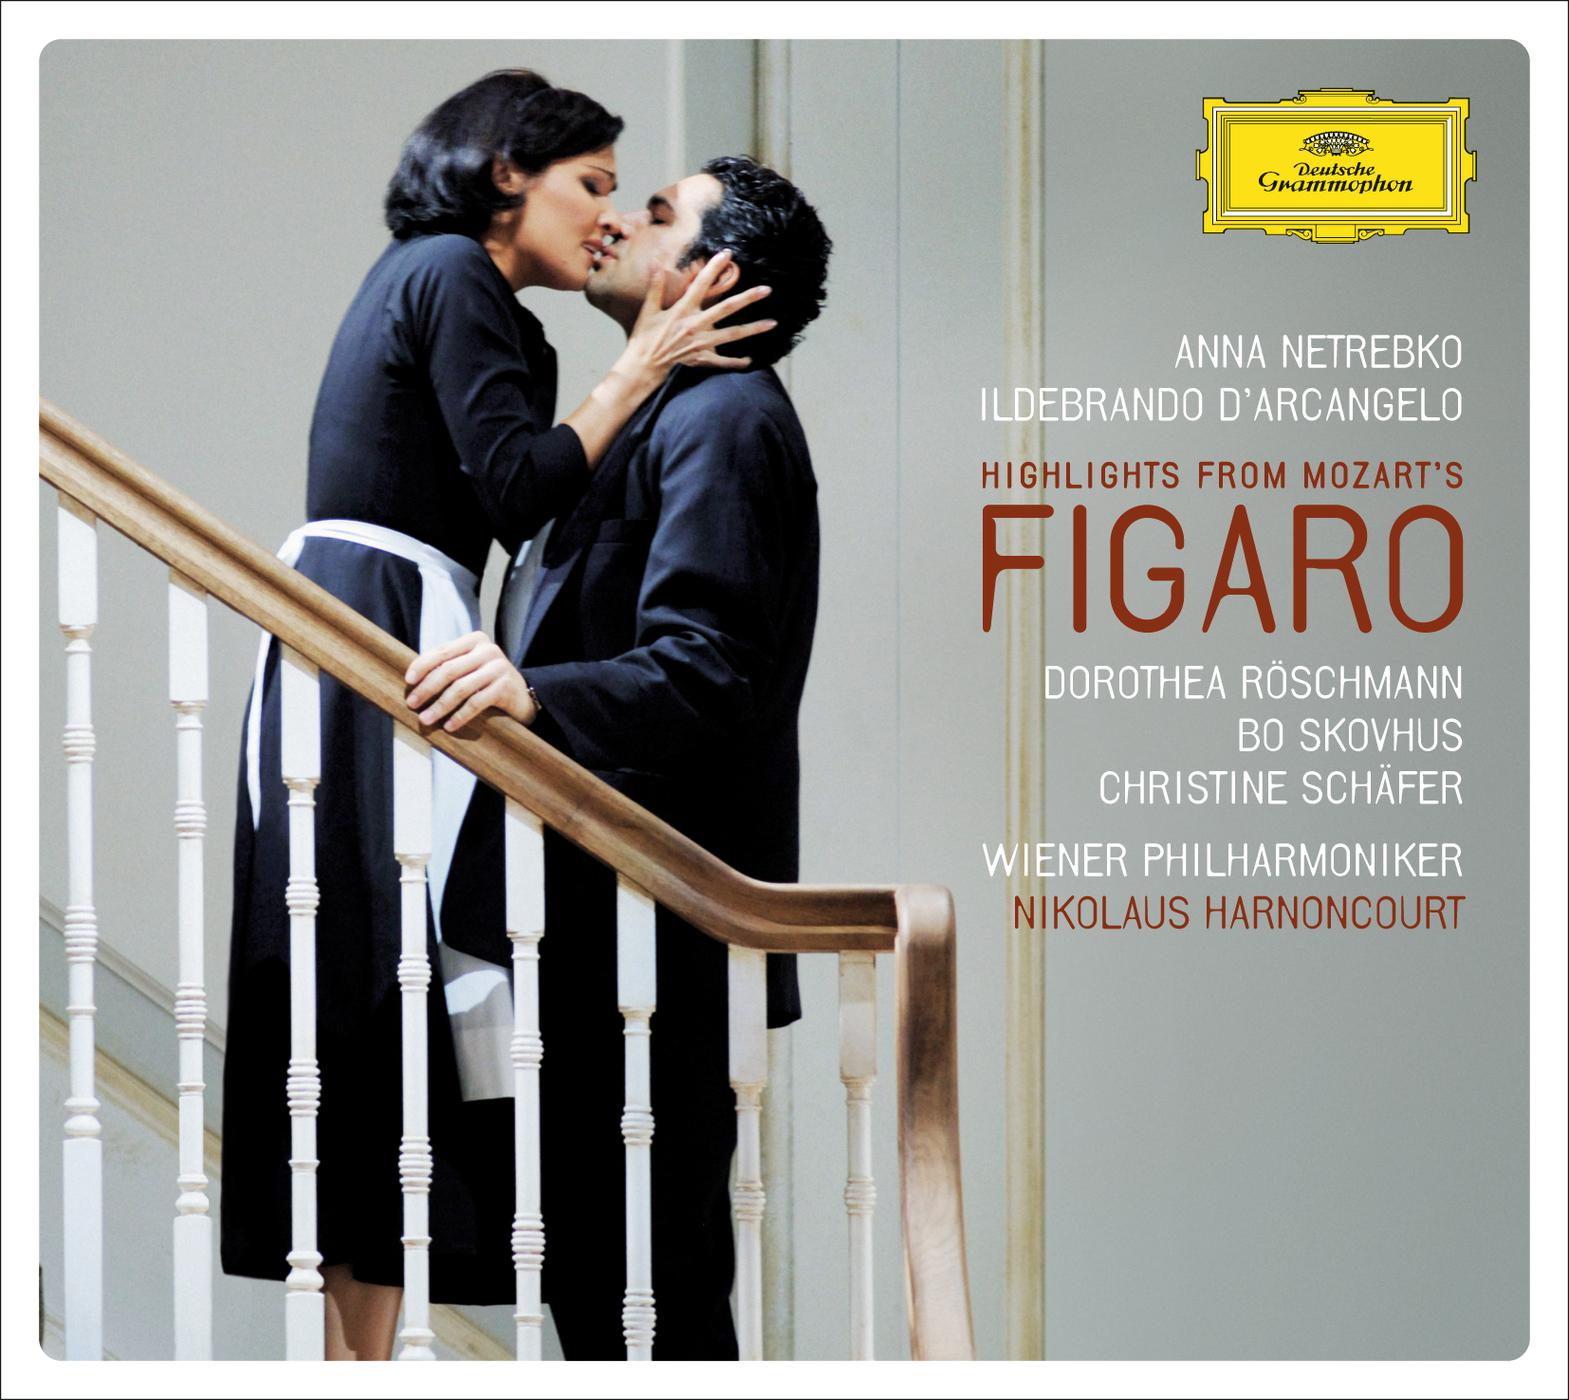 Постер альбома Mozart: Le Nozze di Figaro - Highlights